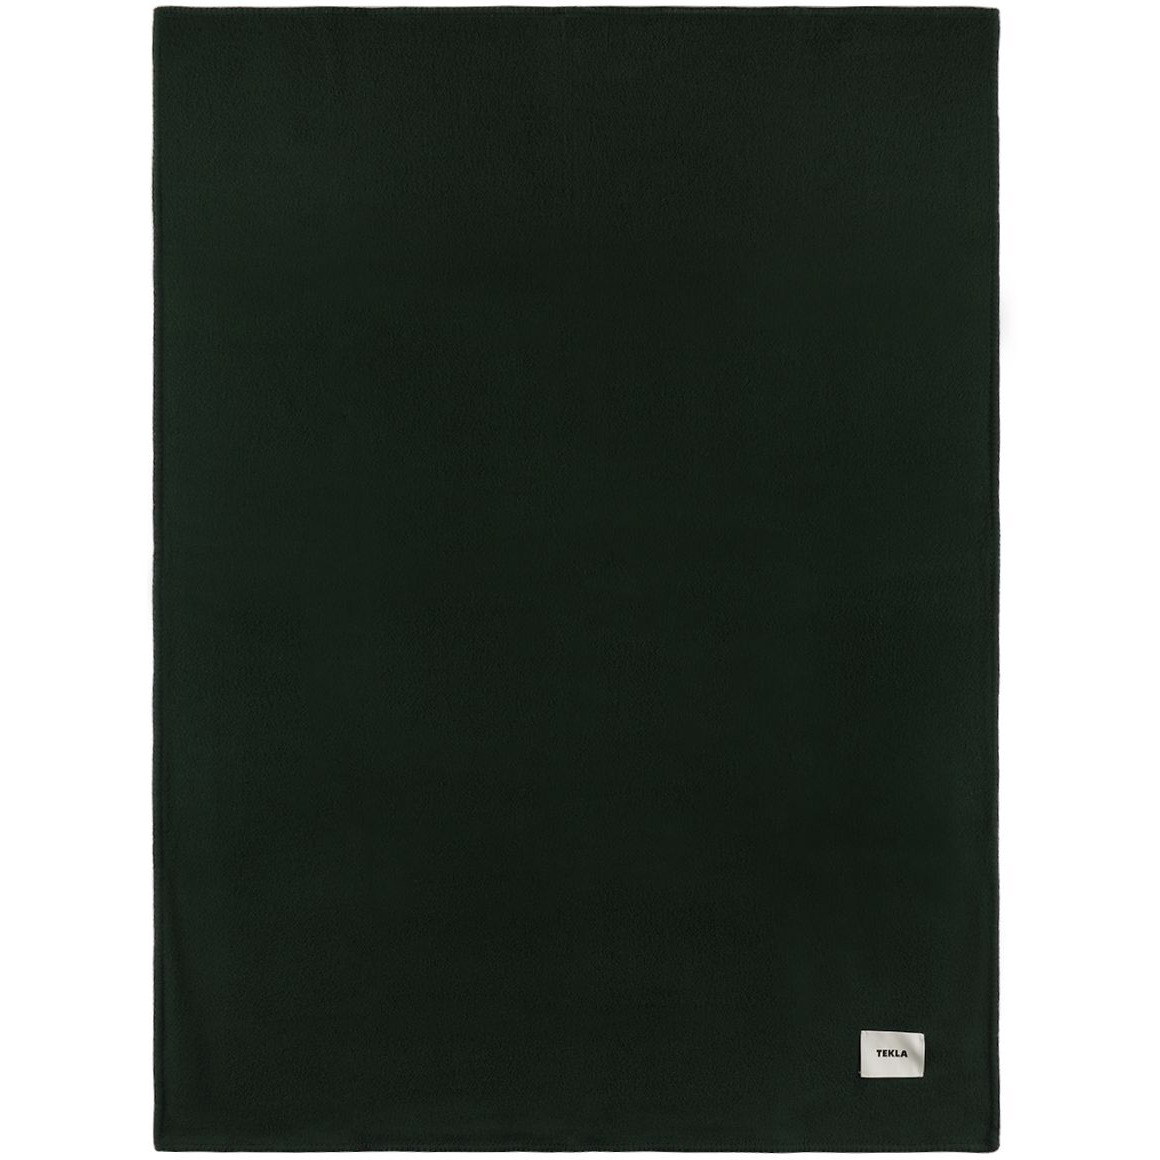 Tekla Green Pure Wool Blanket - image 1